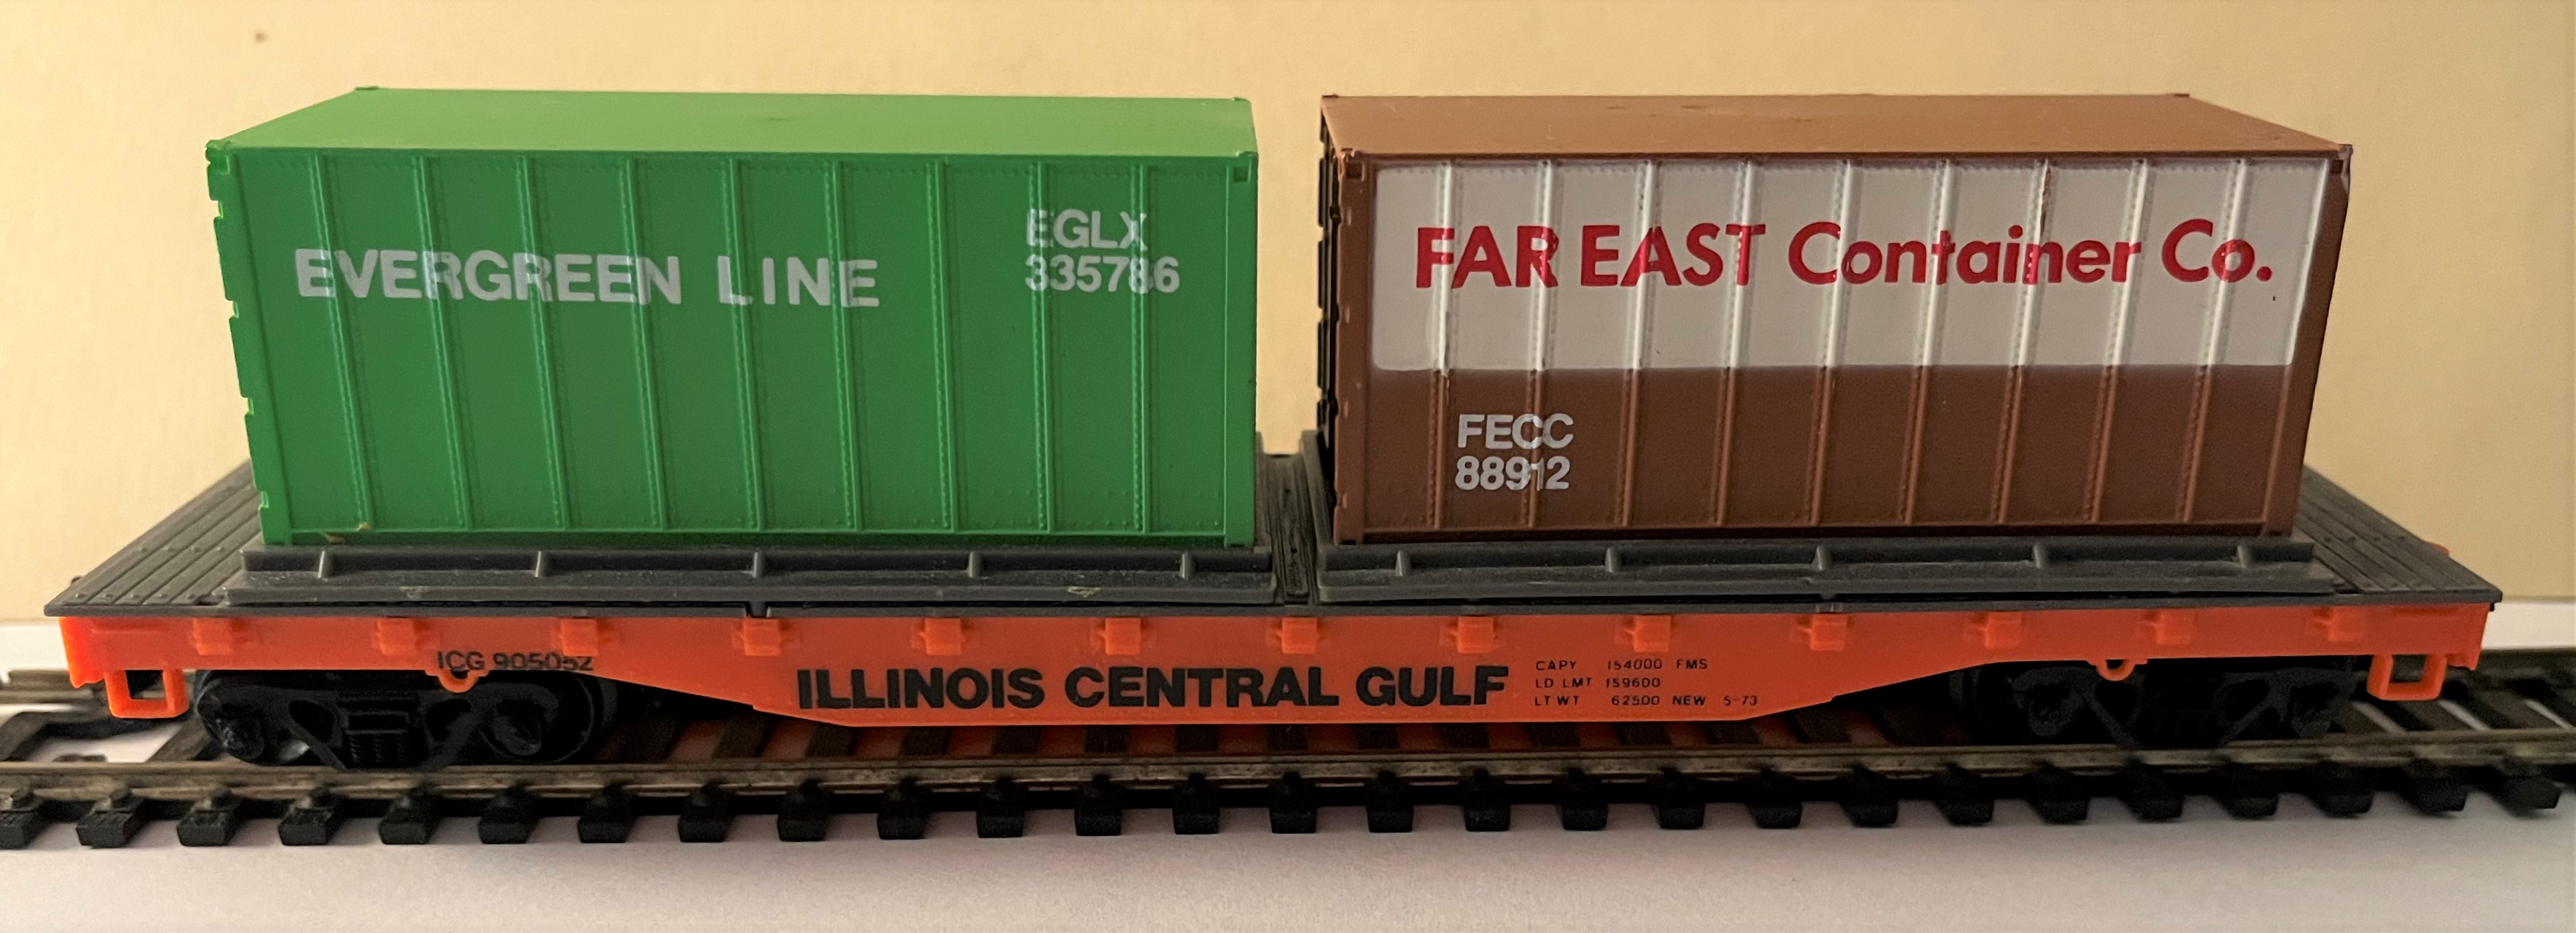 HO Scale - Life-Like - Flatcar, 50 Foot - Illinois Central Gulf - 905052